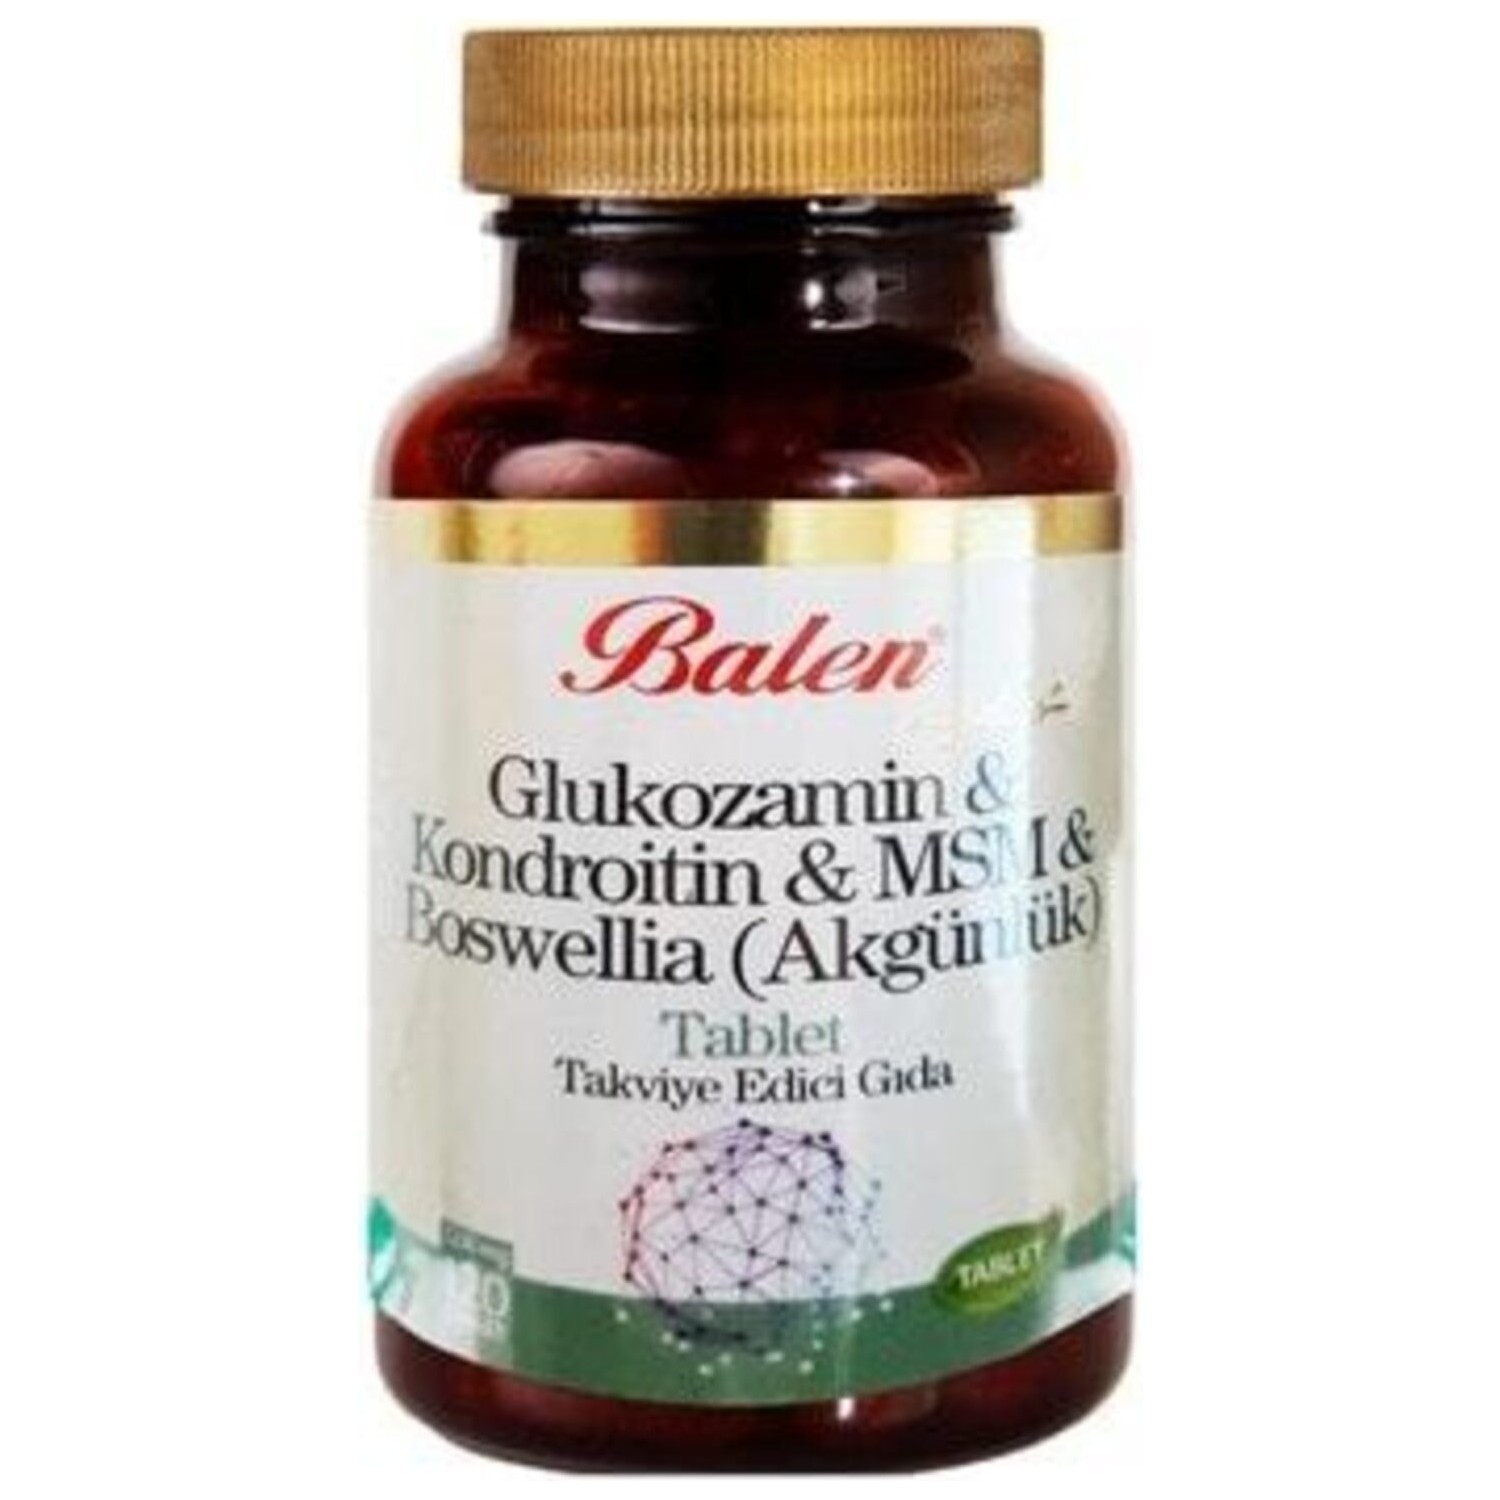 Активная добавка глюкозамин Balen Chondroitin Msm Boswellia Akgunluk, 120 капсул, 1200 мг активная добавка глюкозамин balen chondroitin msm 120 капсул 970 мг 2 штуки